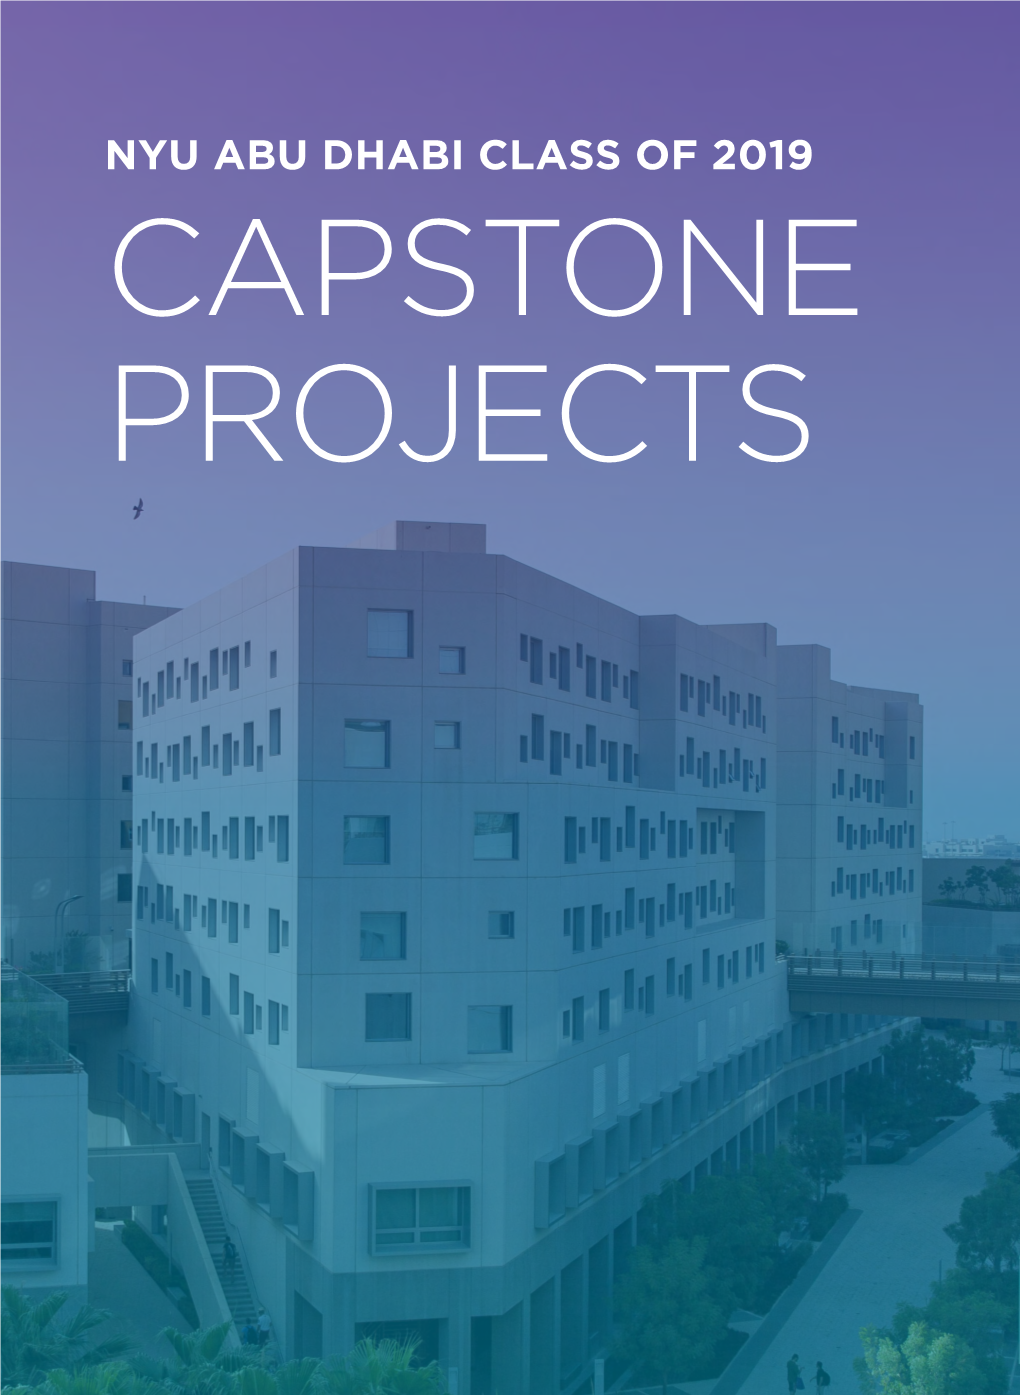 Nyu Abu Dhabi Class of 2019 Capstone Projects